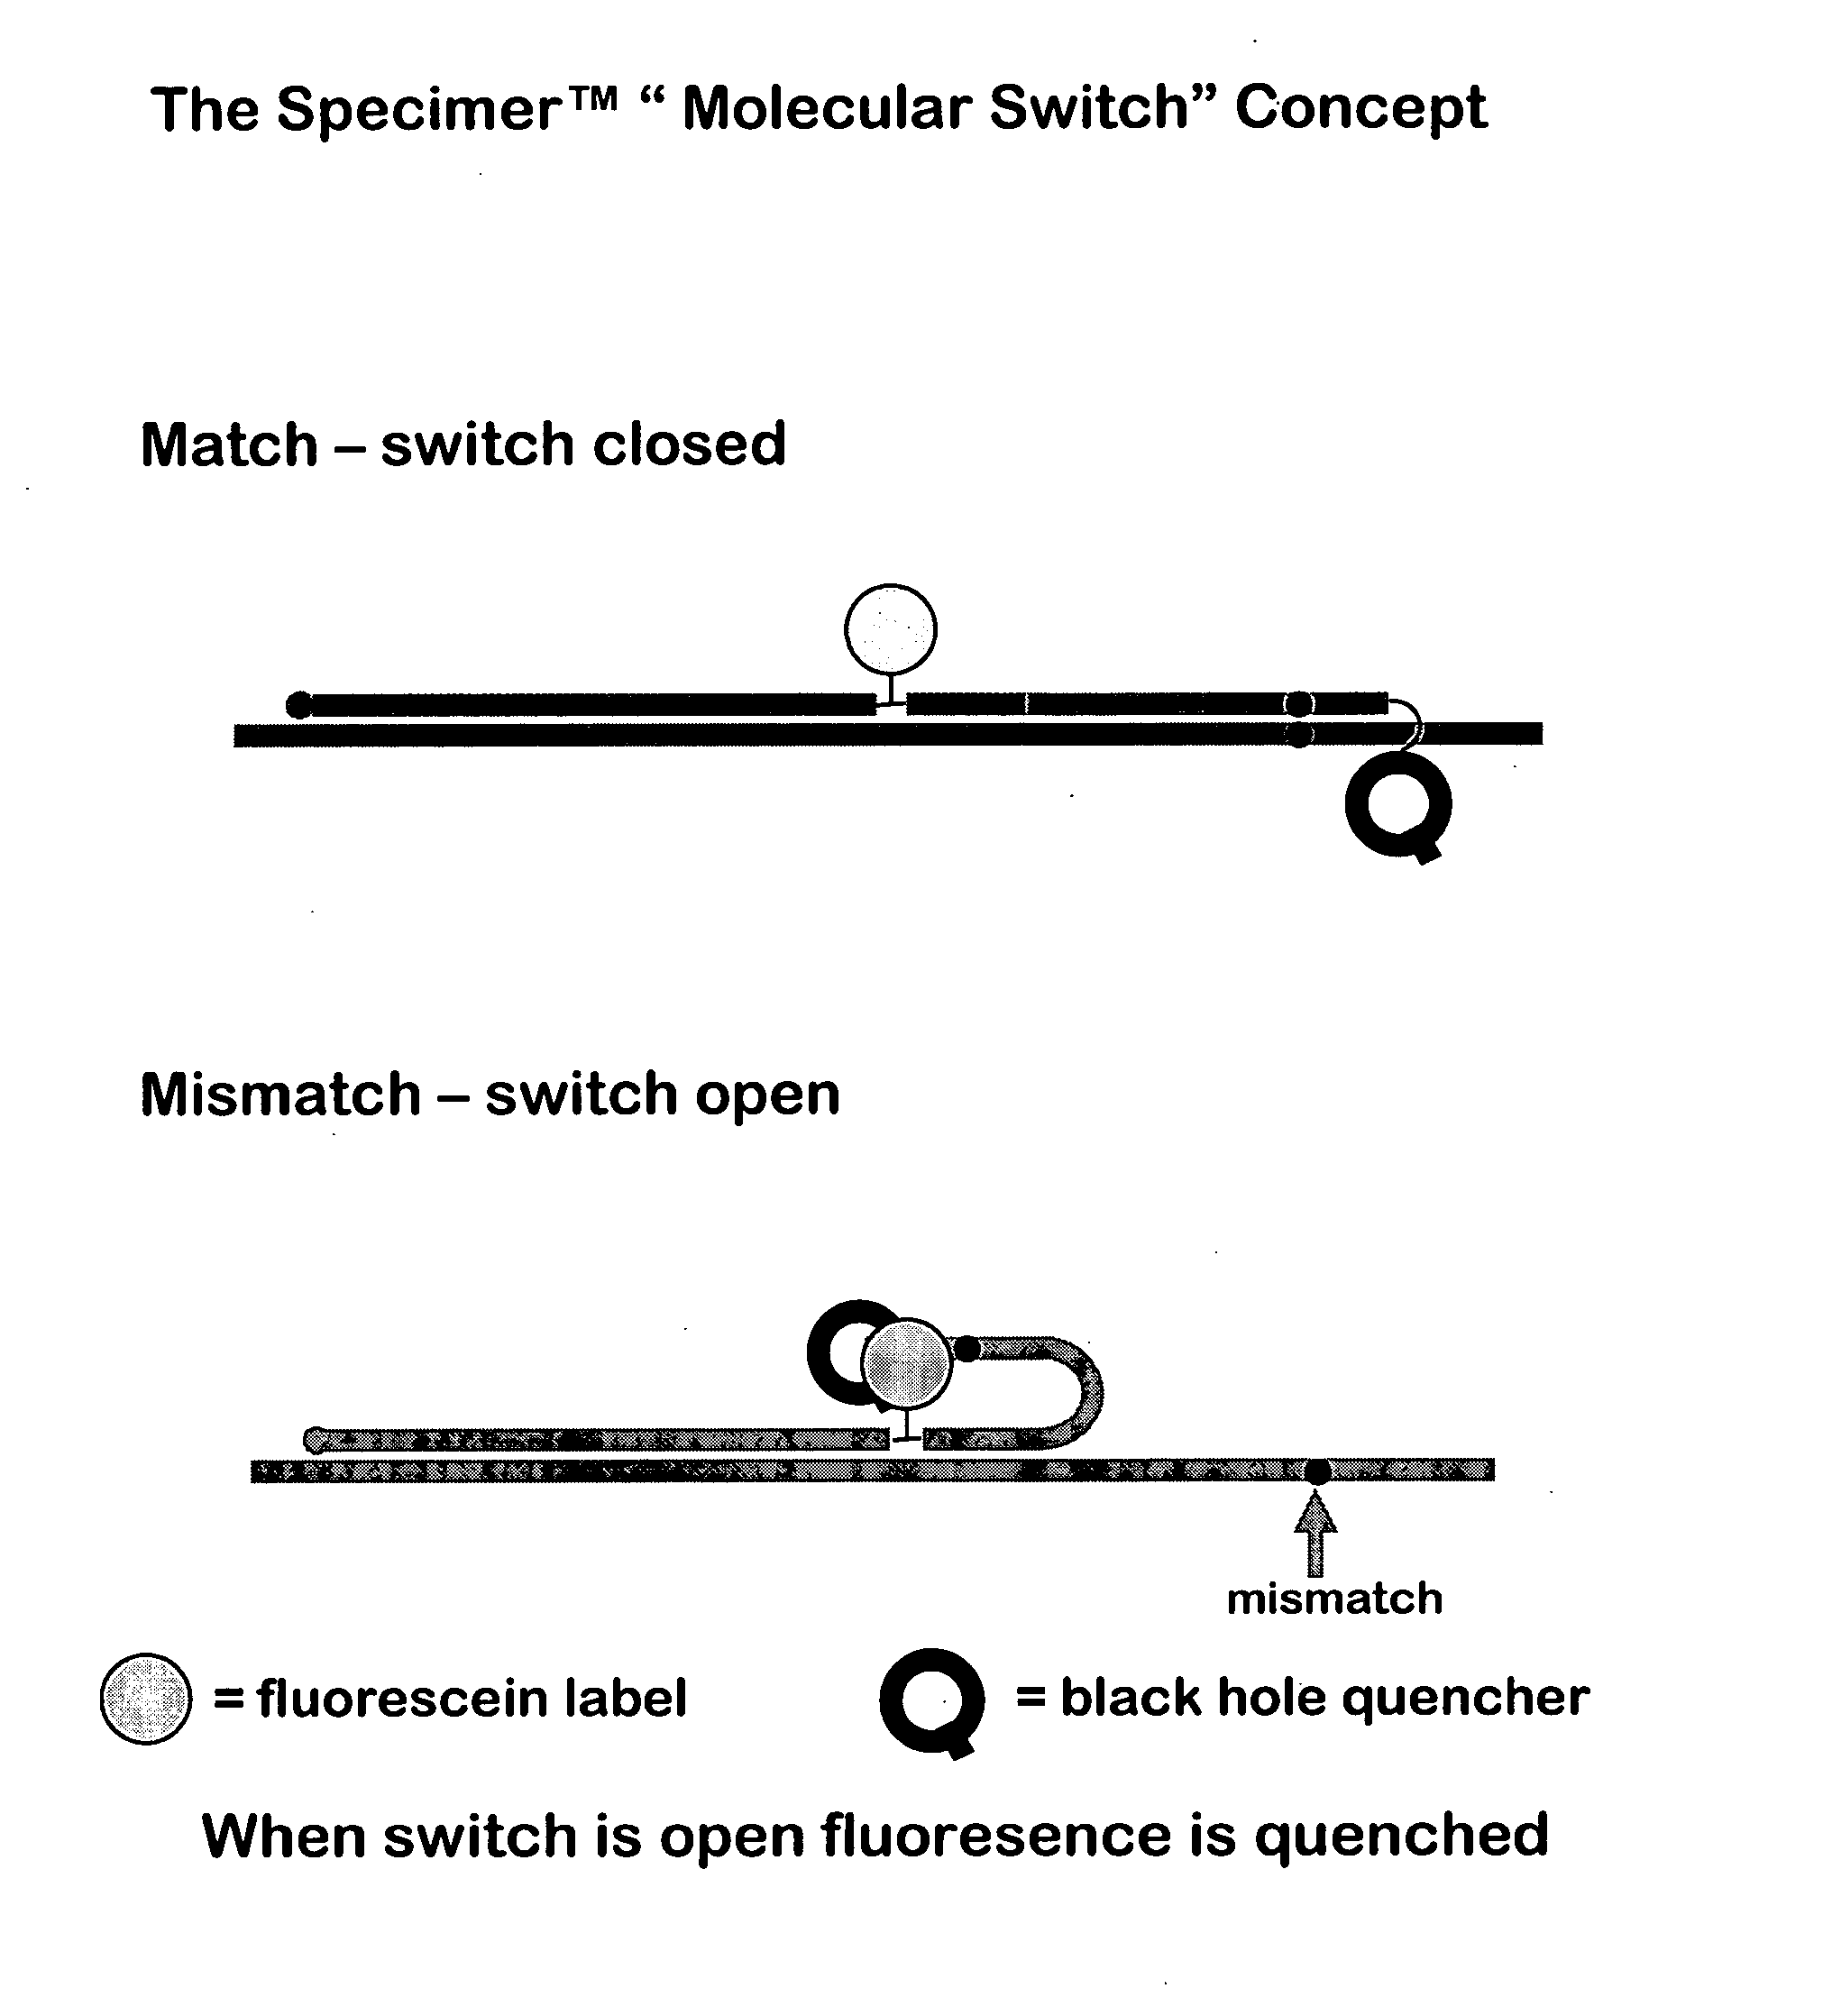 Oligonucleotides comprising a molecular switch